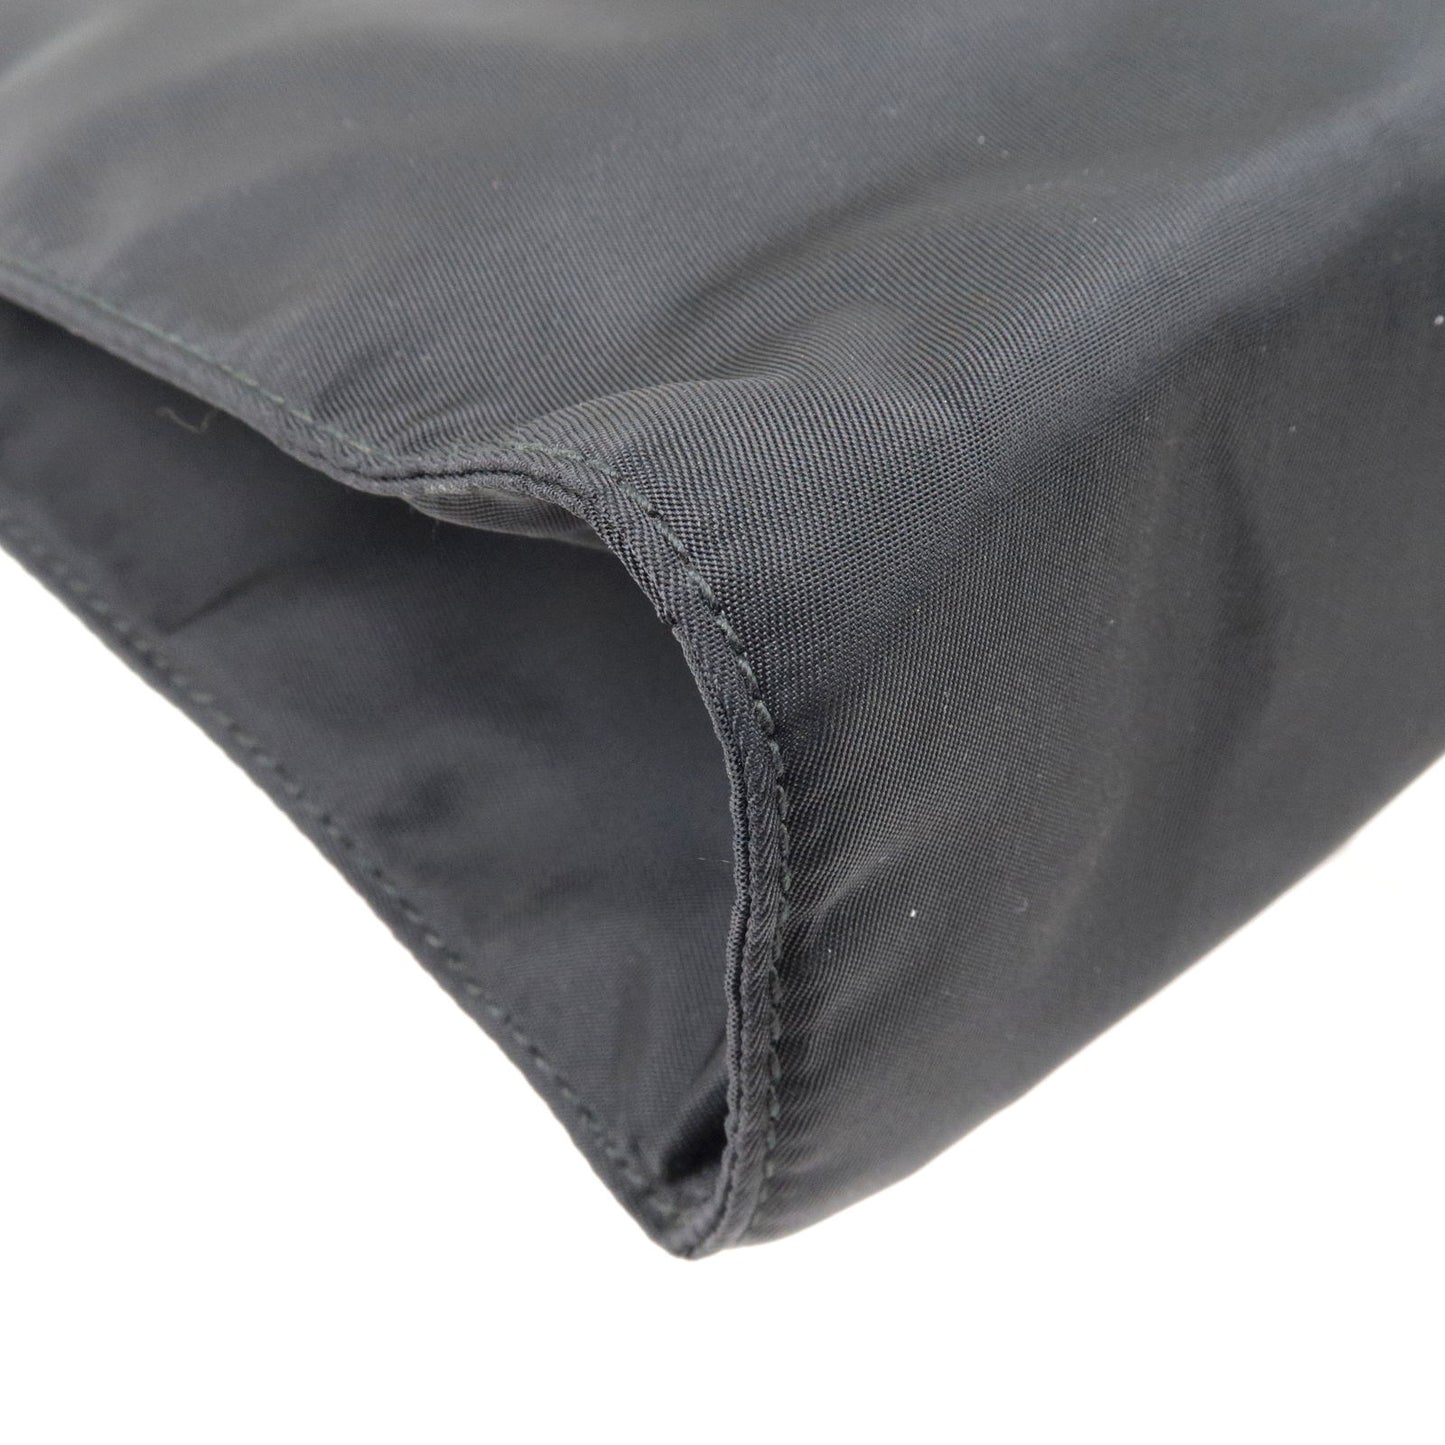 PRADA Logo Nylon Leather Clutch Bag Pouch NERO Black 2NE789